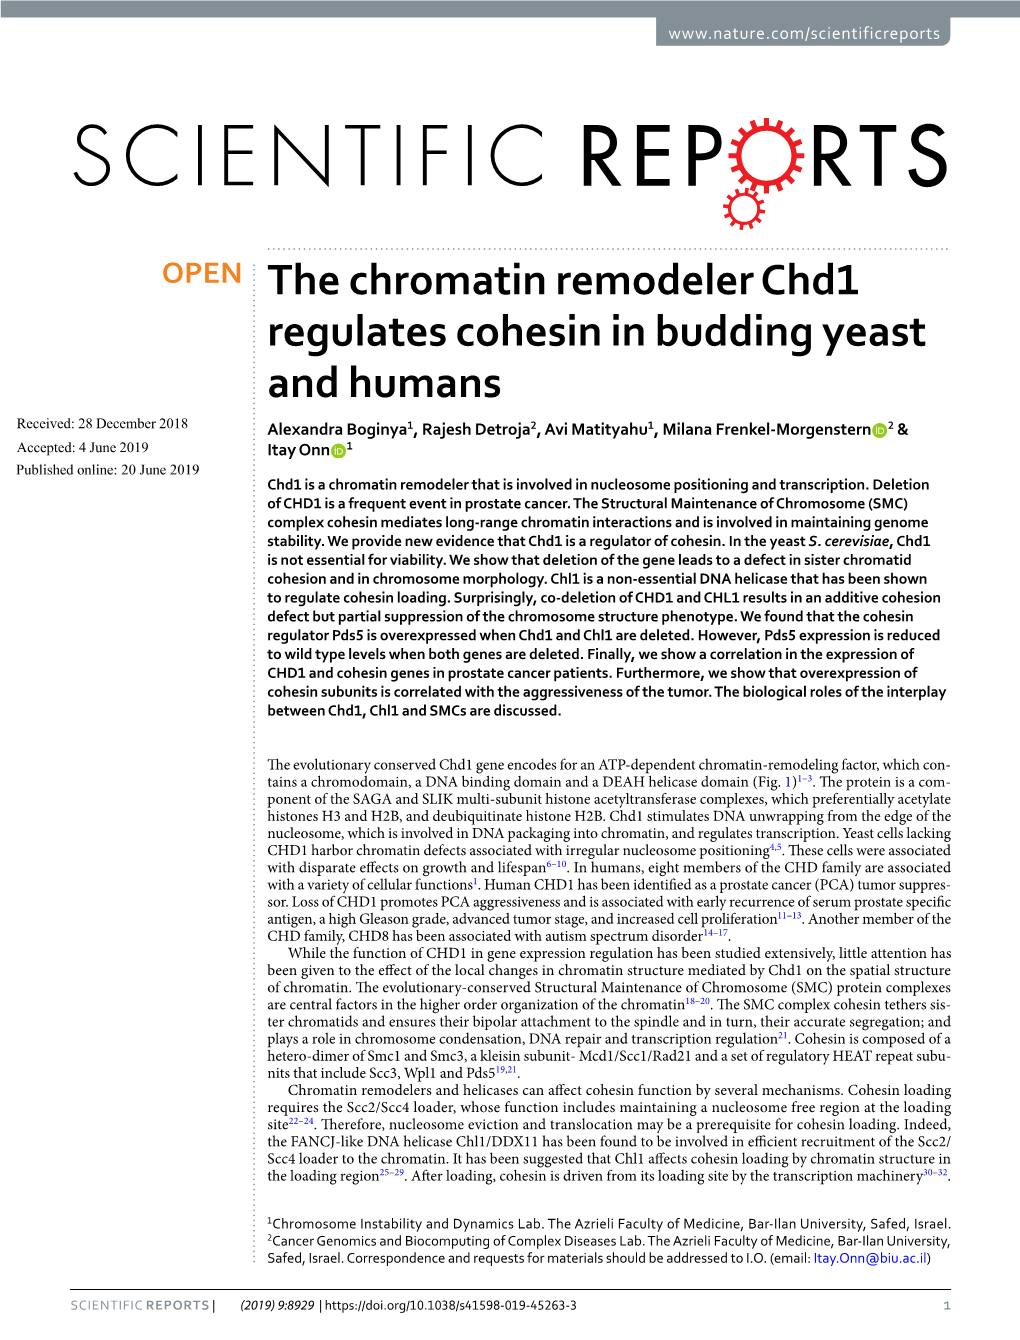 The Chromatin Remodeler Chd1 Regulates Cohesin in Budding Yeast